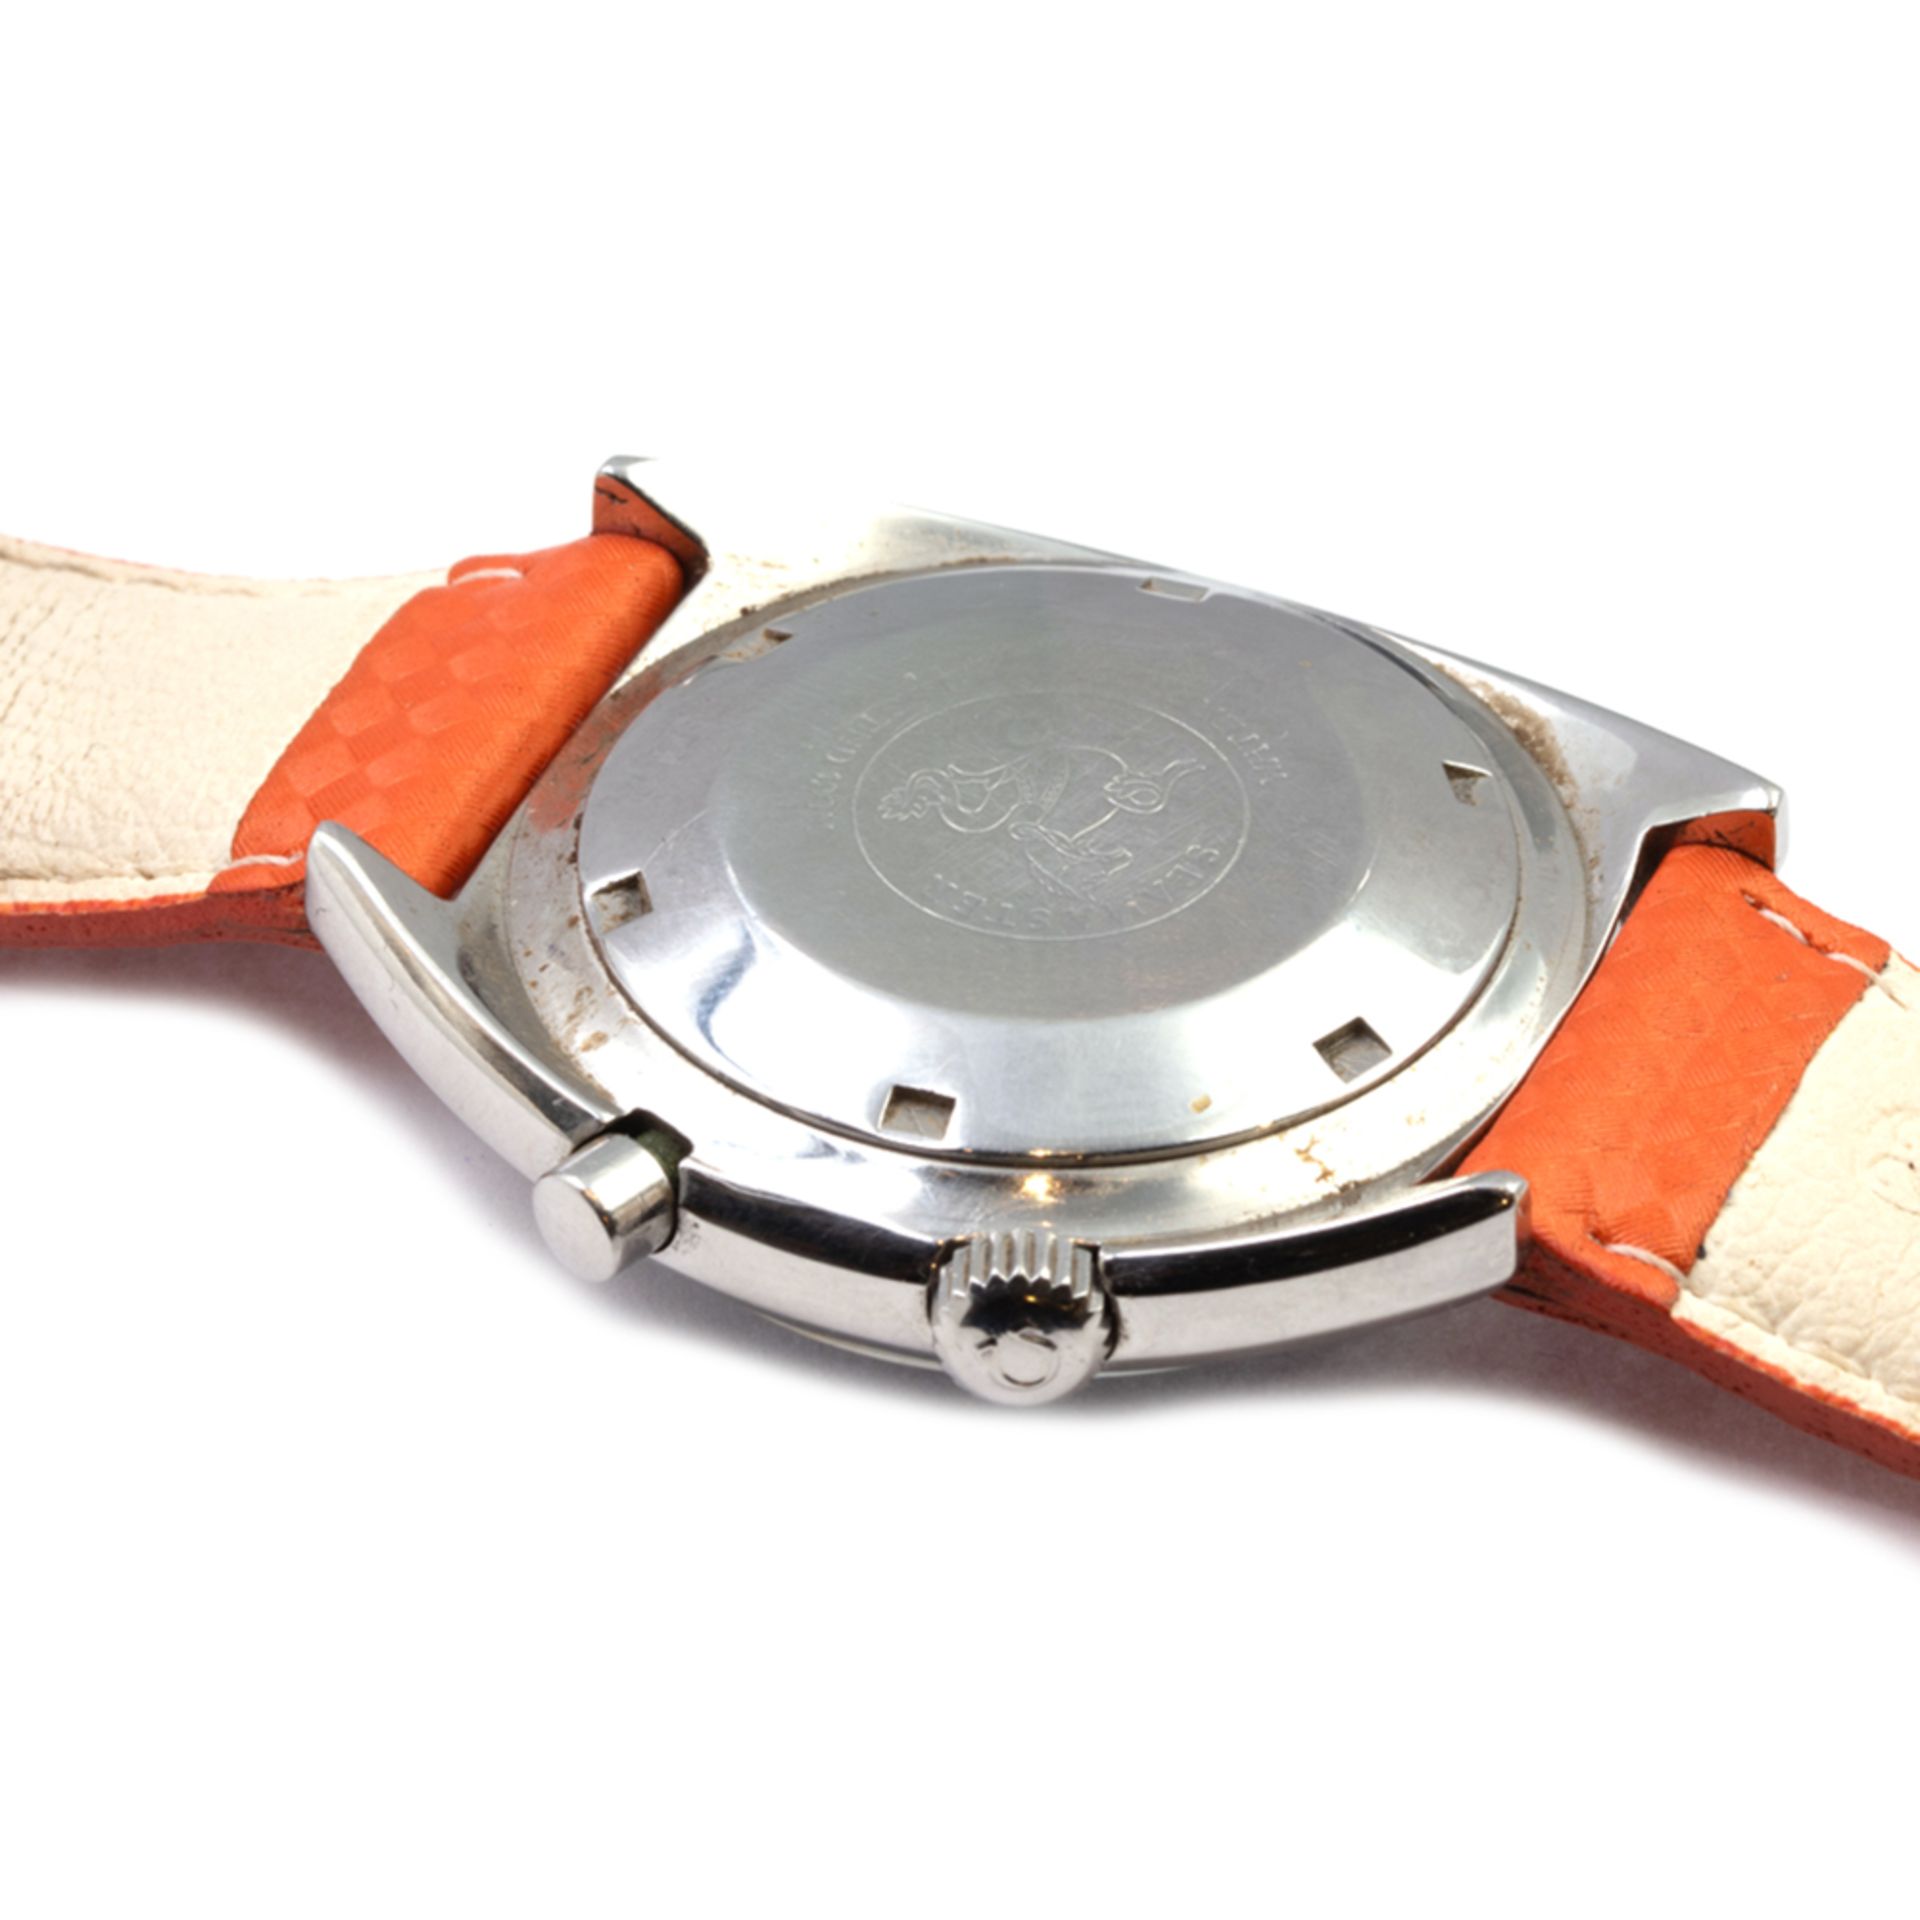 Omega Chronostop Seamaster, vintage wristwatch - Image 2 of 2